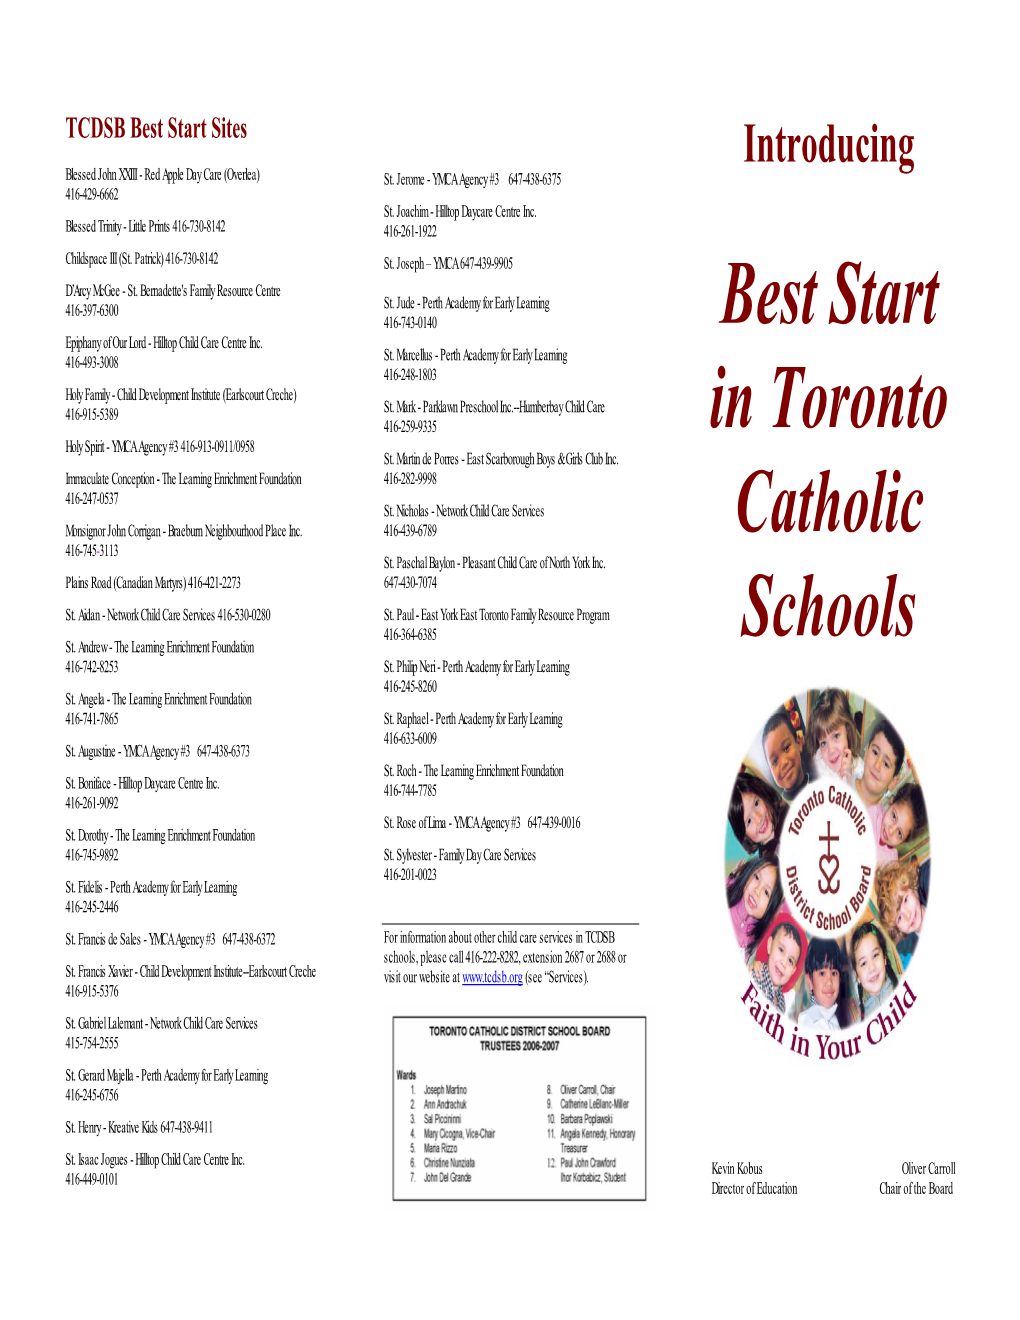 Best Start in Toronto Catholic Schools